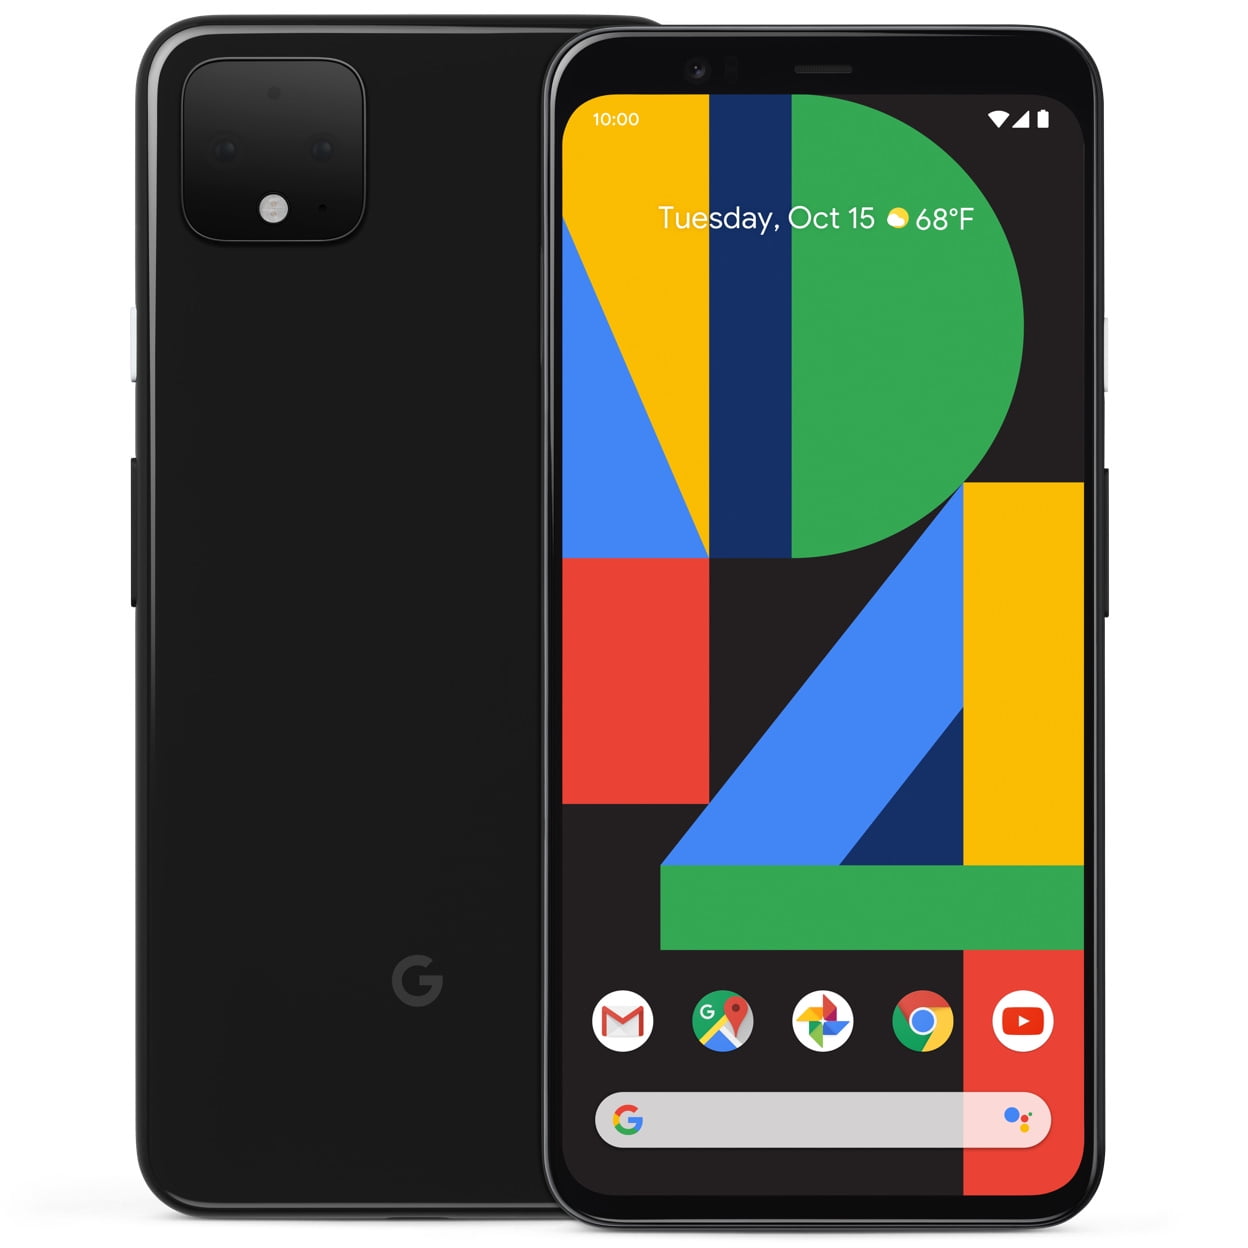 Unlocked Google Pixel 3 XL Just Black for sale online 64GB 